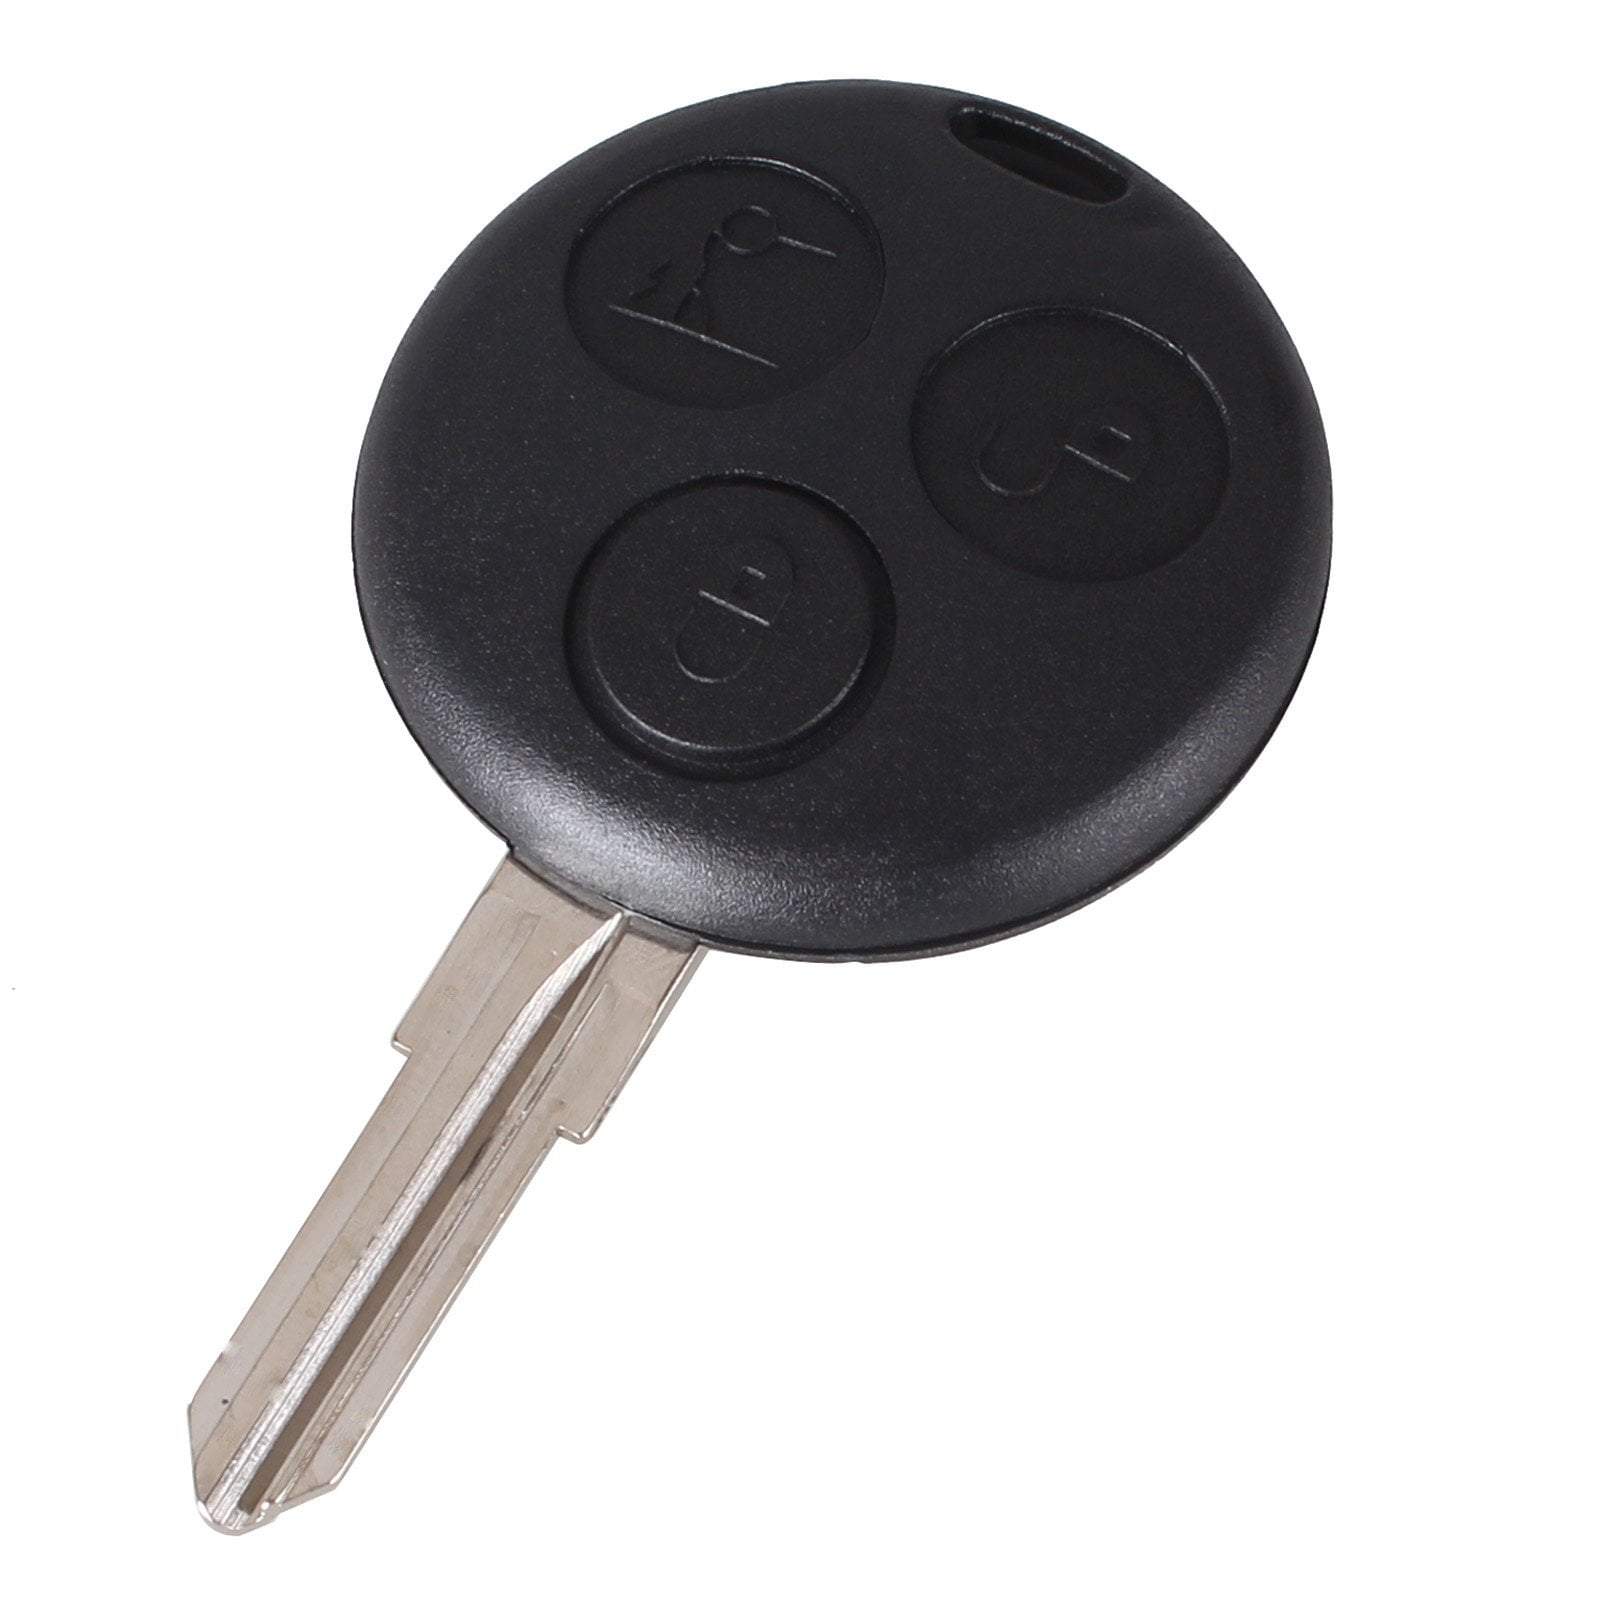 Fekete színű, 3 gombos Smart kulcs.